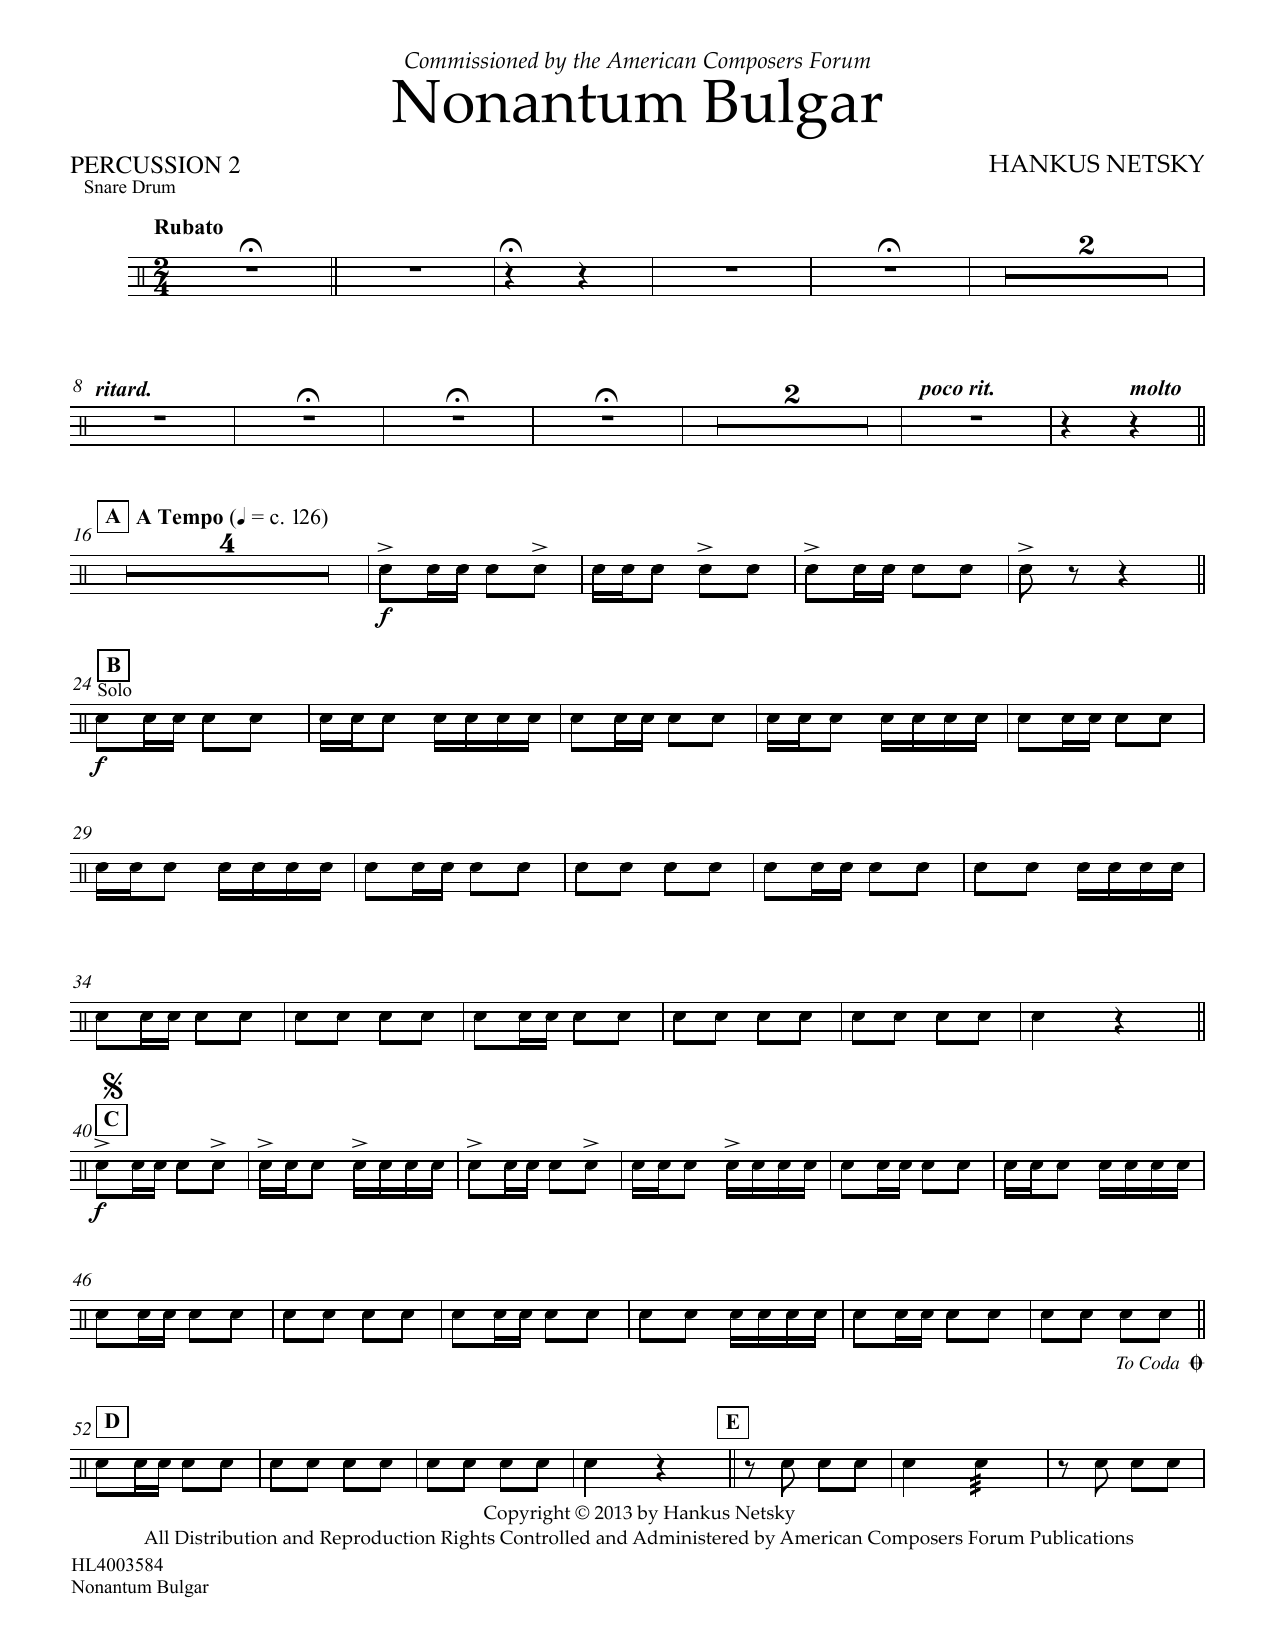 Hankus Netsky Nonantum Bulgar - Percussion 2 Sheet Music Notes & Chords for Concert Band - Download or Print PDF